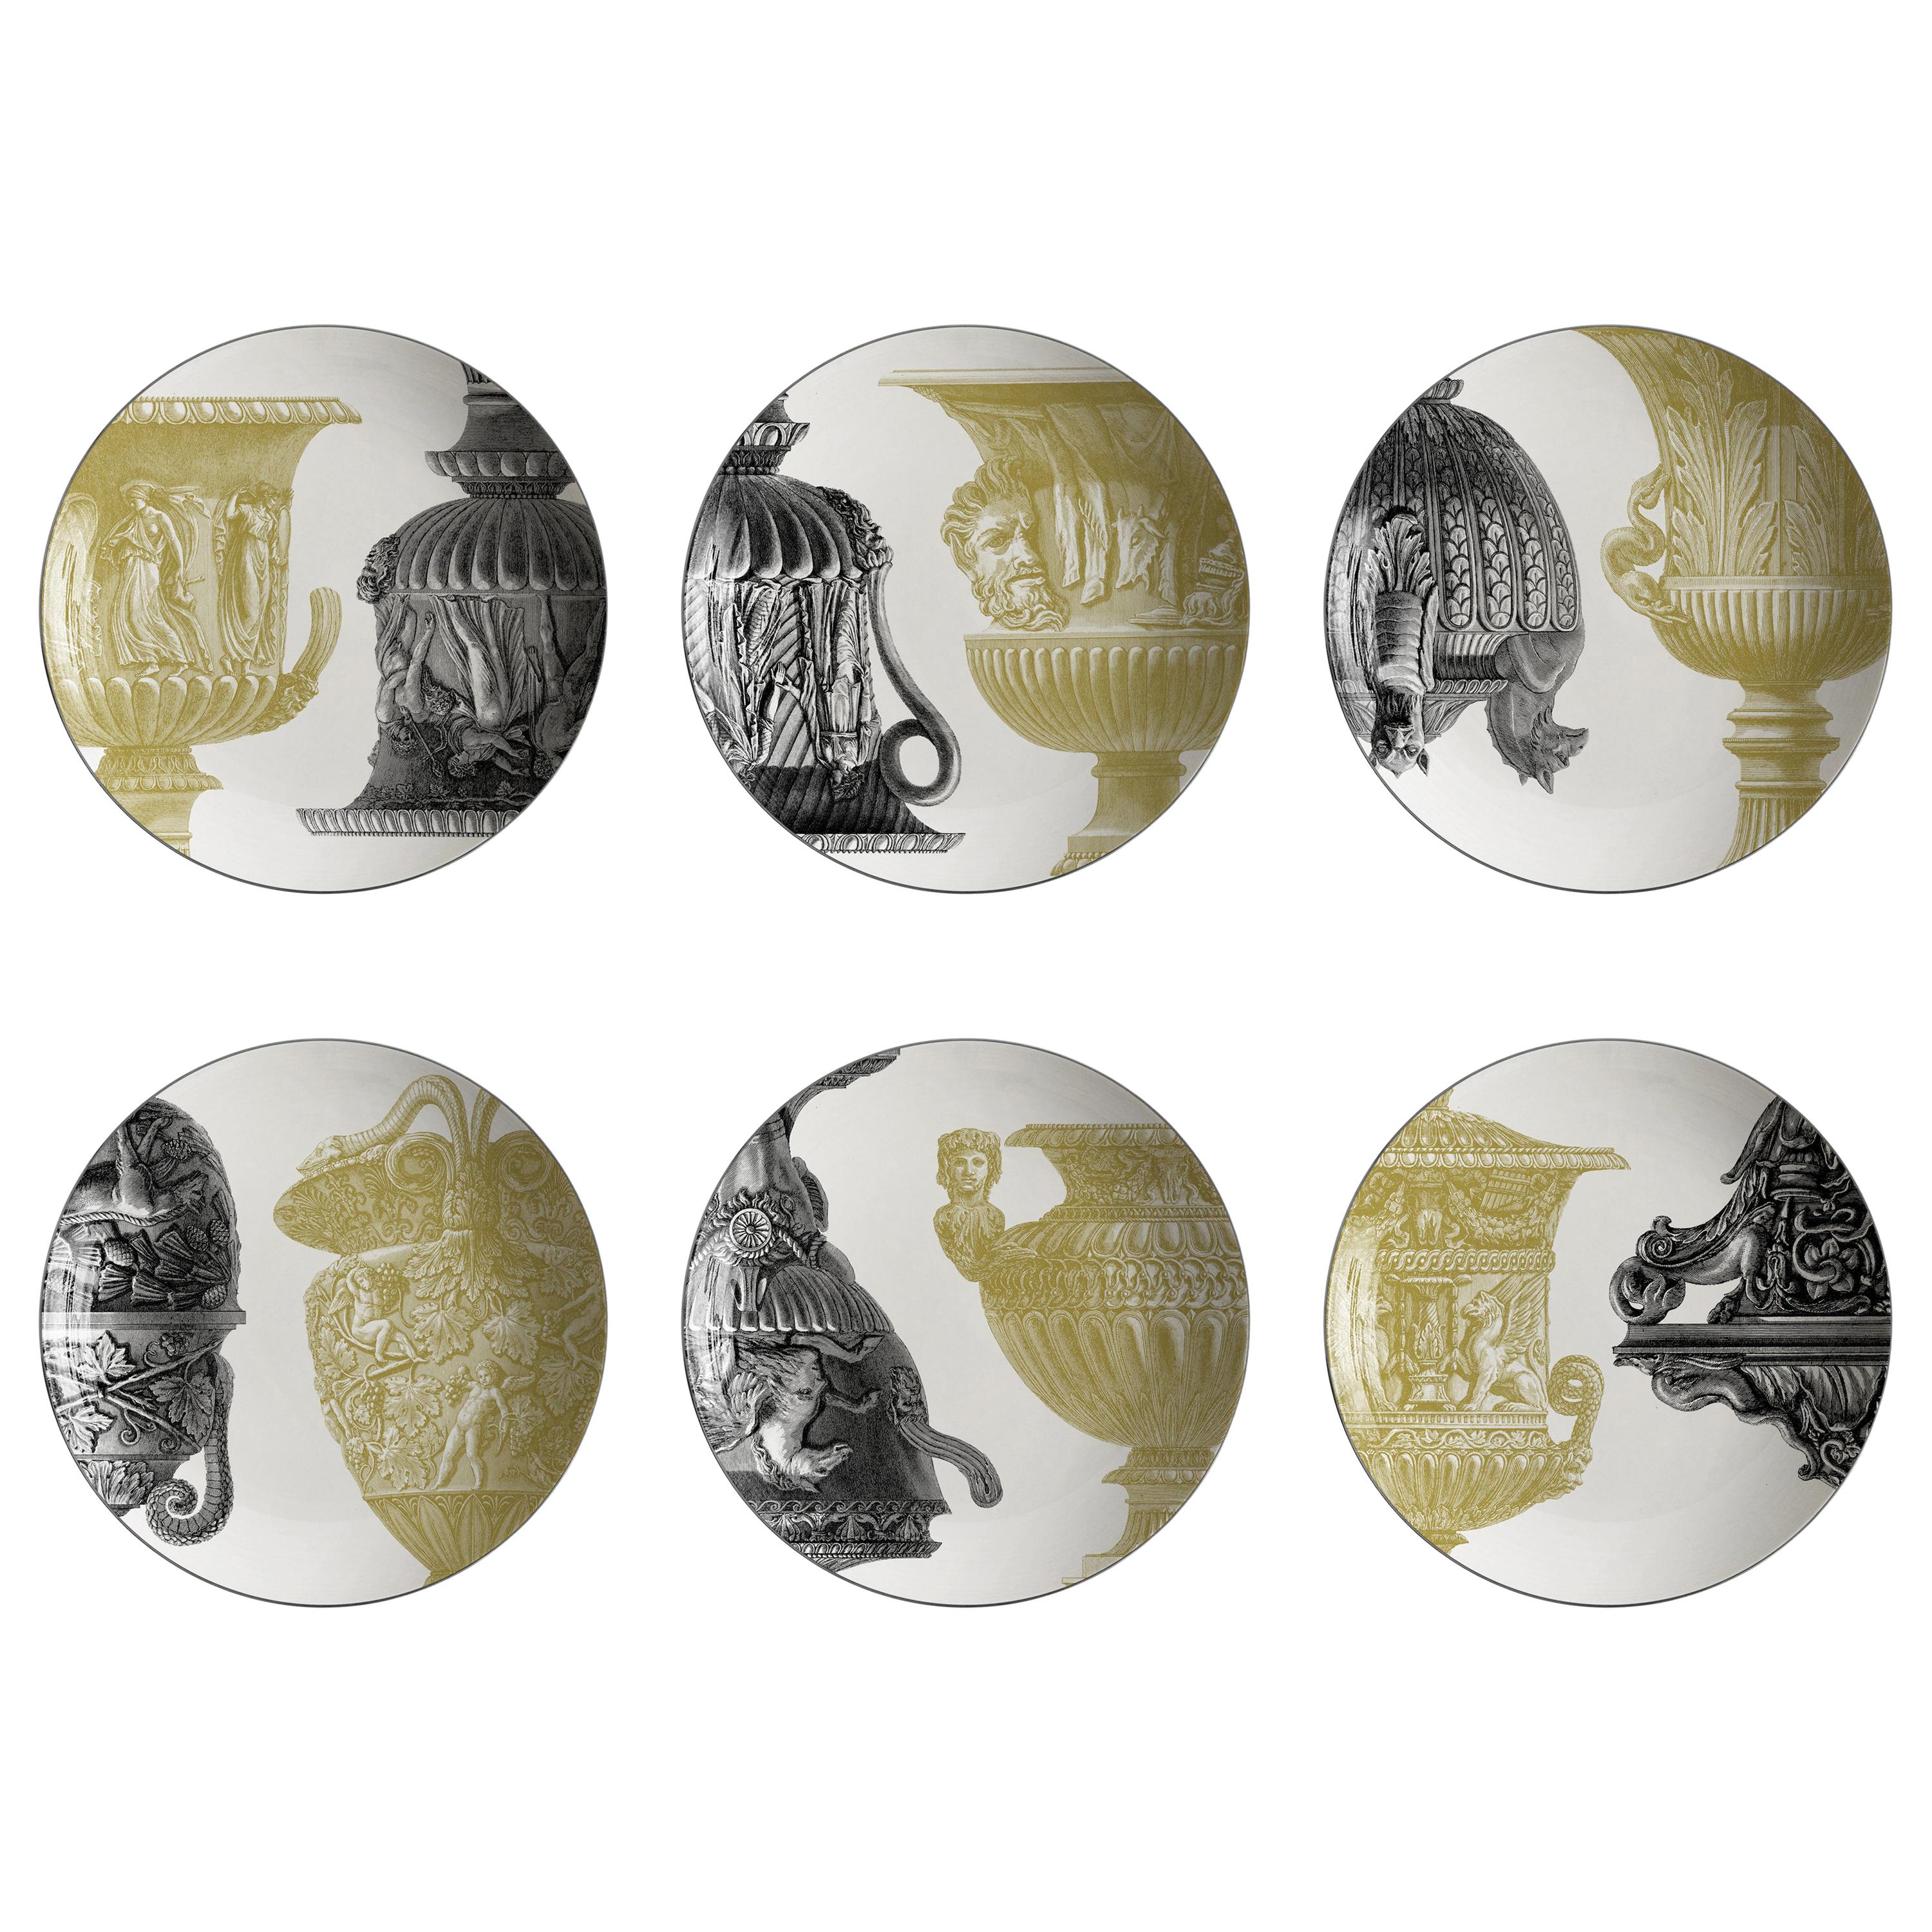 Roma, Six Contemporary Porcelain soup plates with Decorative Design